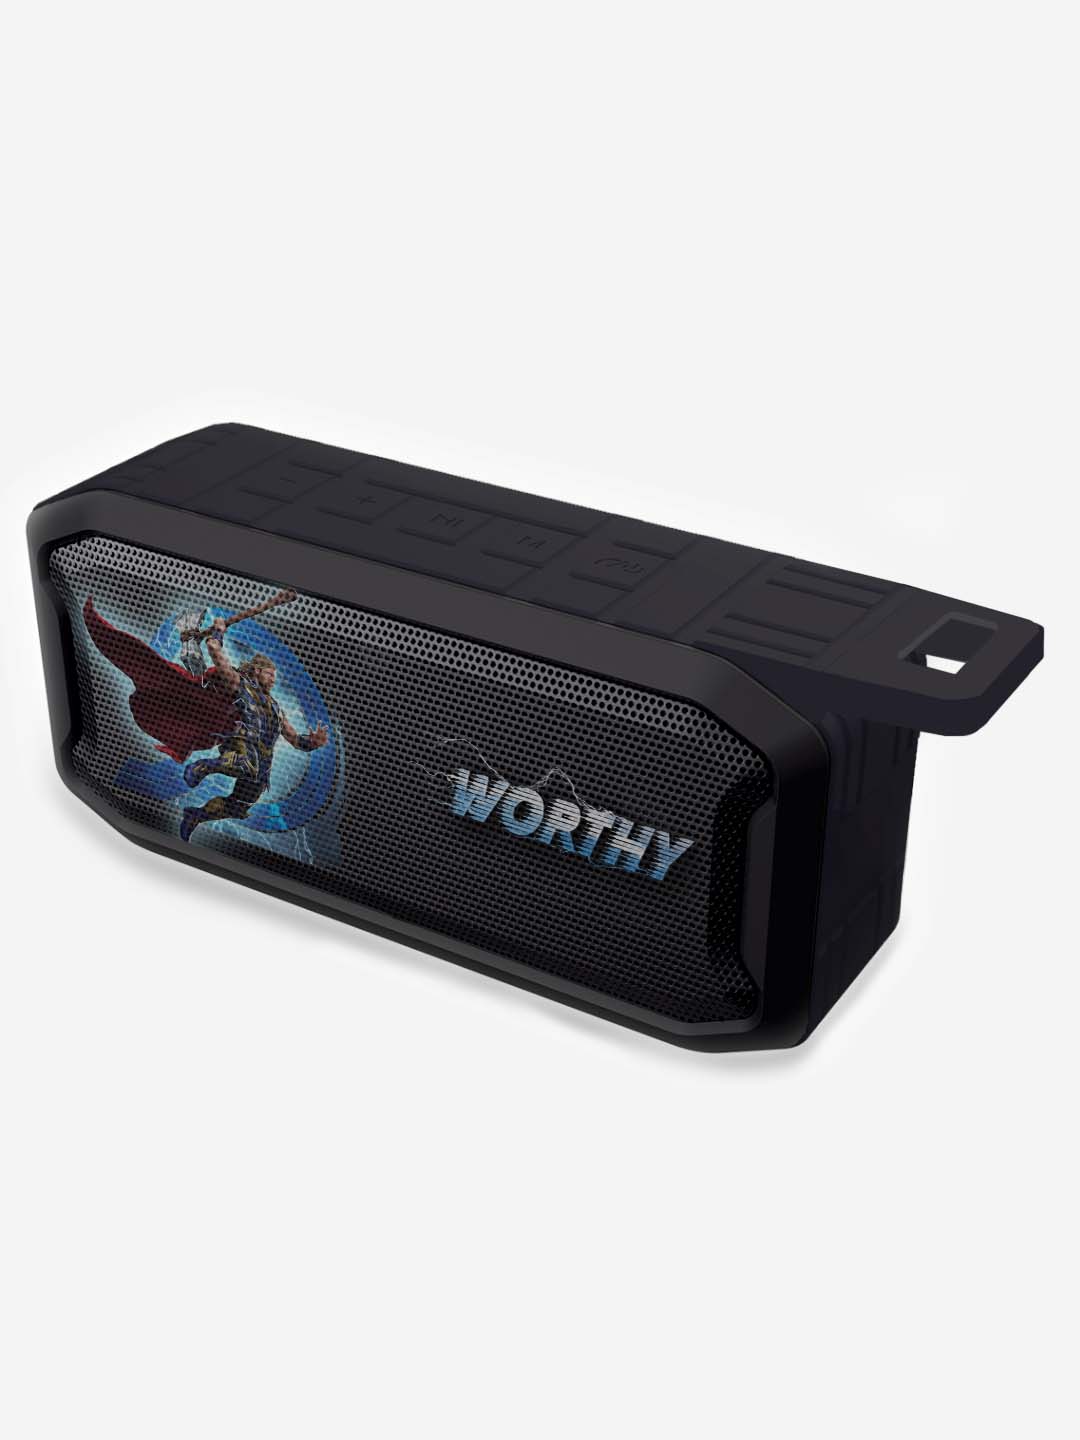 Buy Worthy Thor Attack - Macmerise Melody Bluetooth Speaker Speakers Online